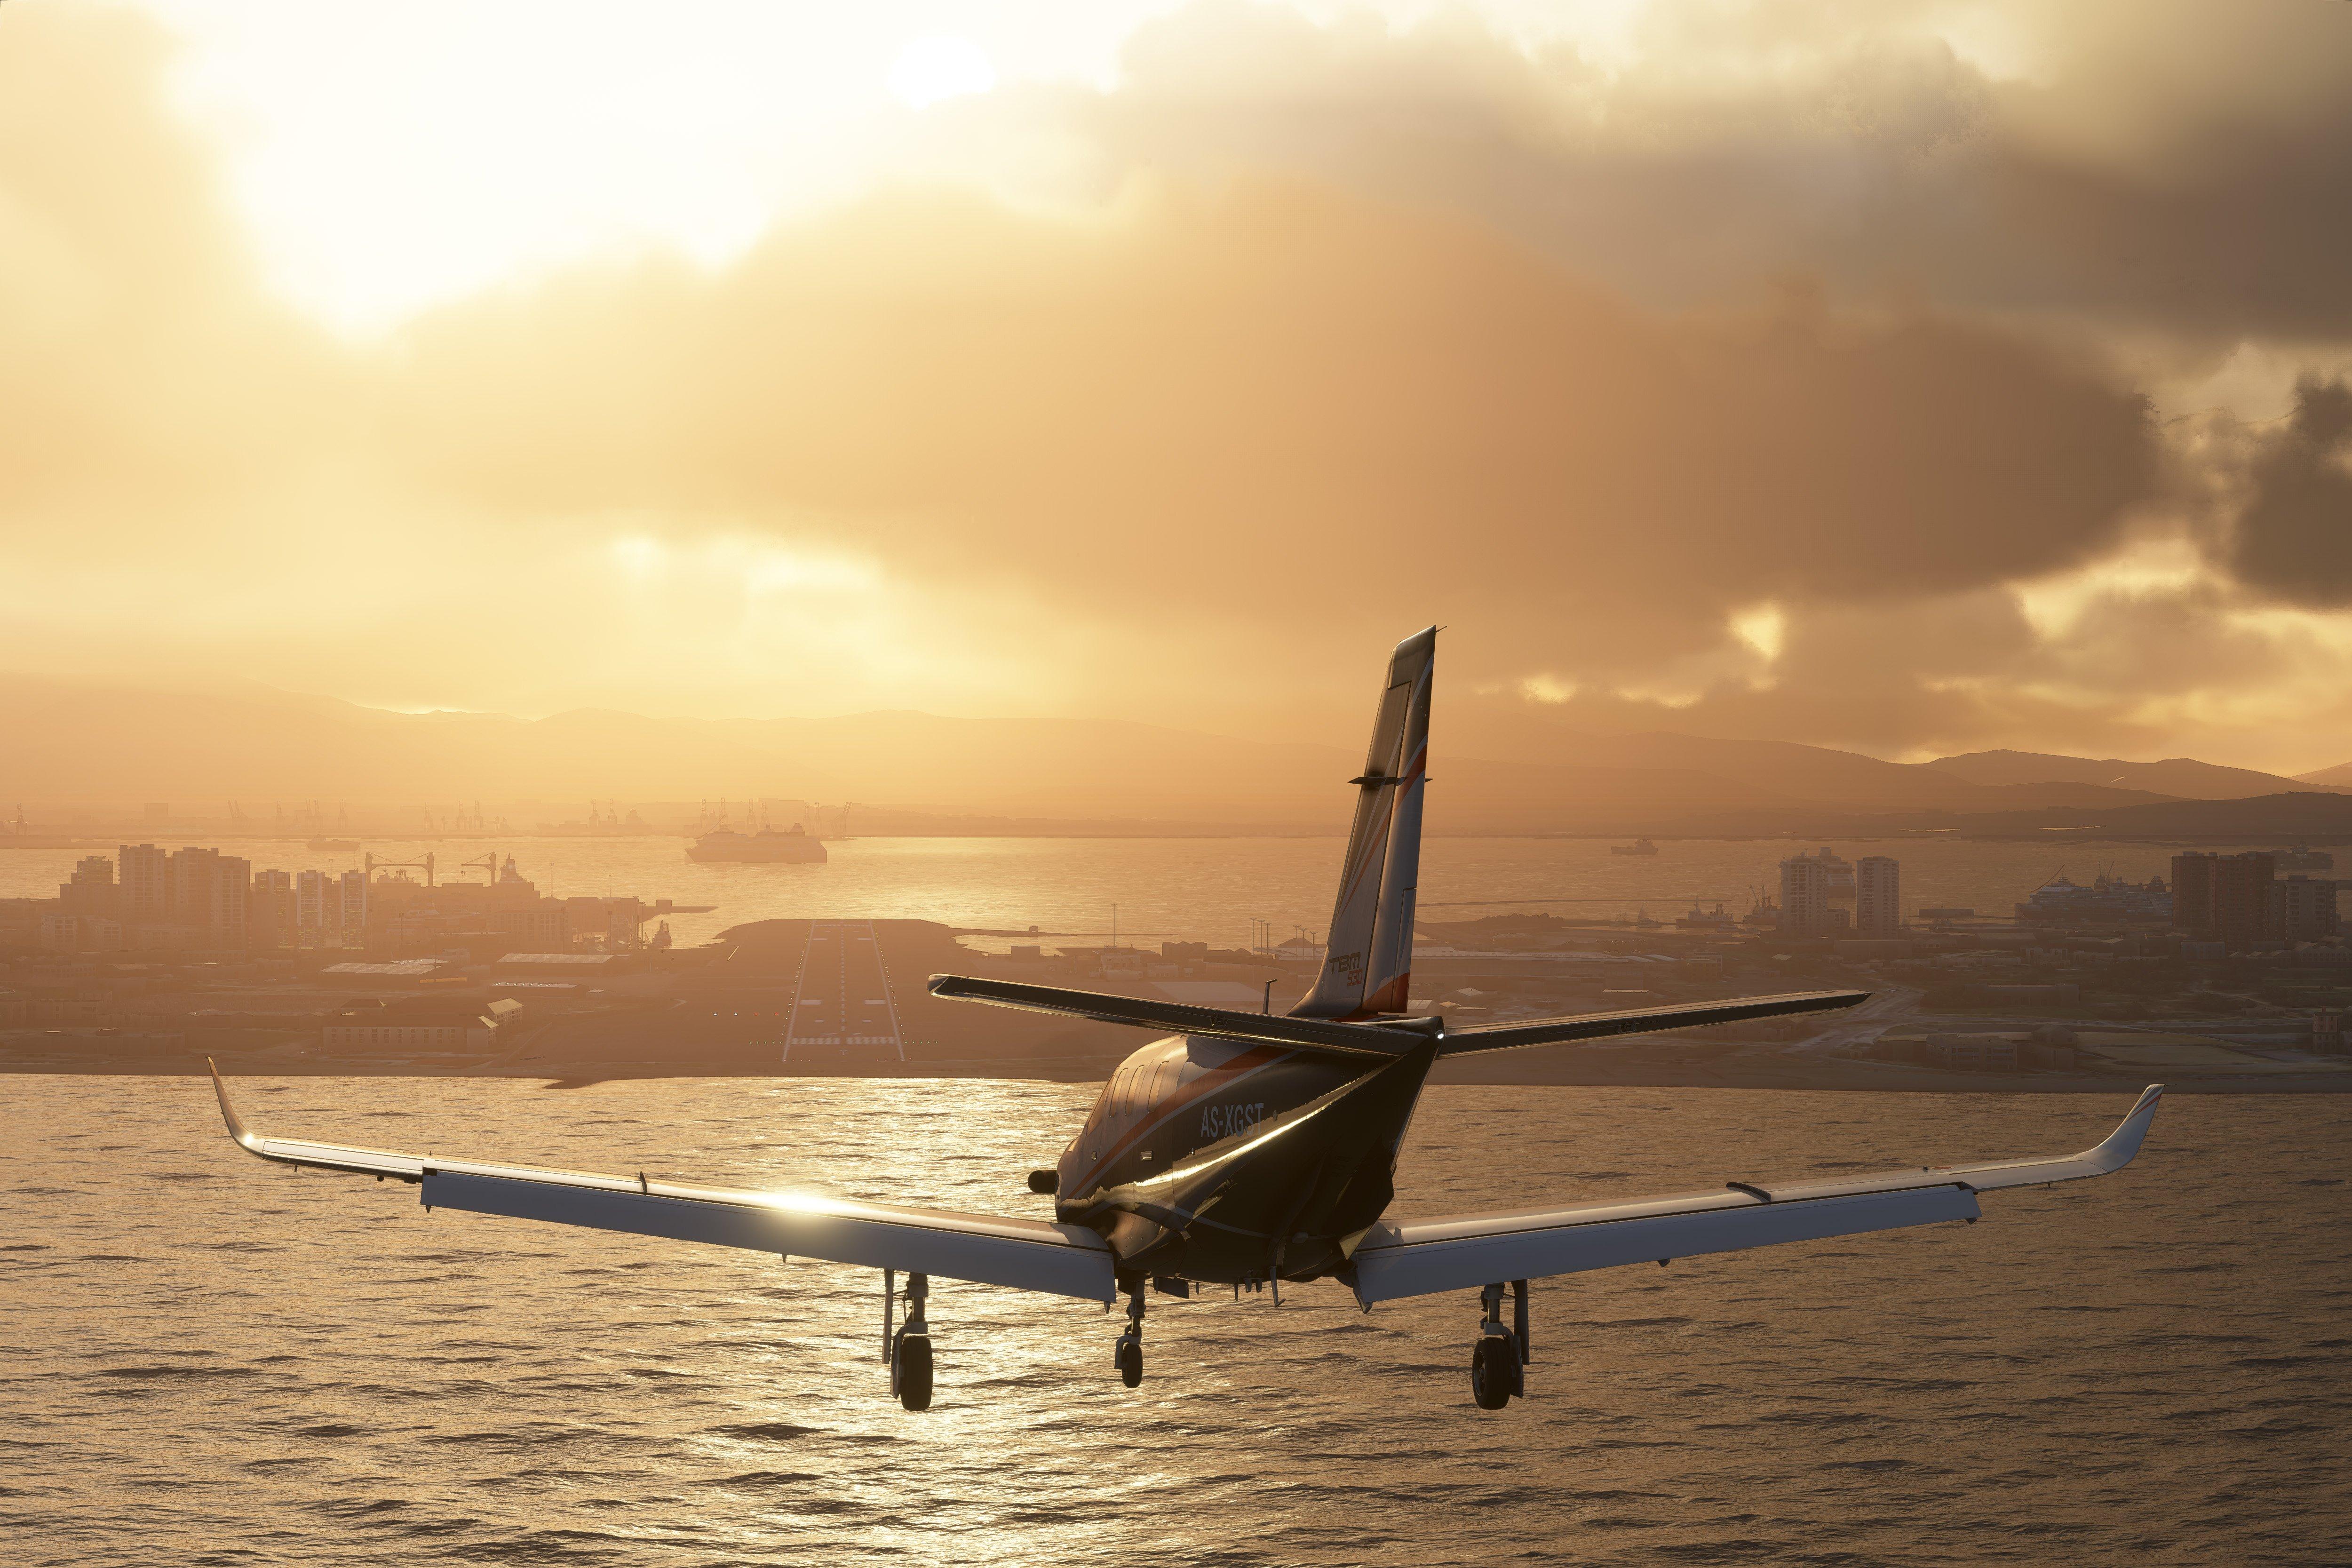 Flight Simulator X Q&A - Missions, Multiplayer, and Vista - GameSpot